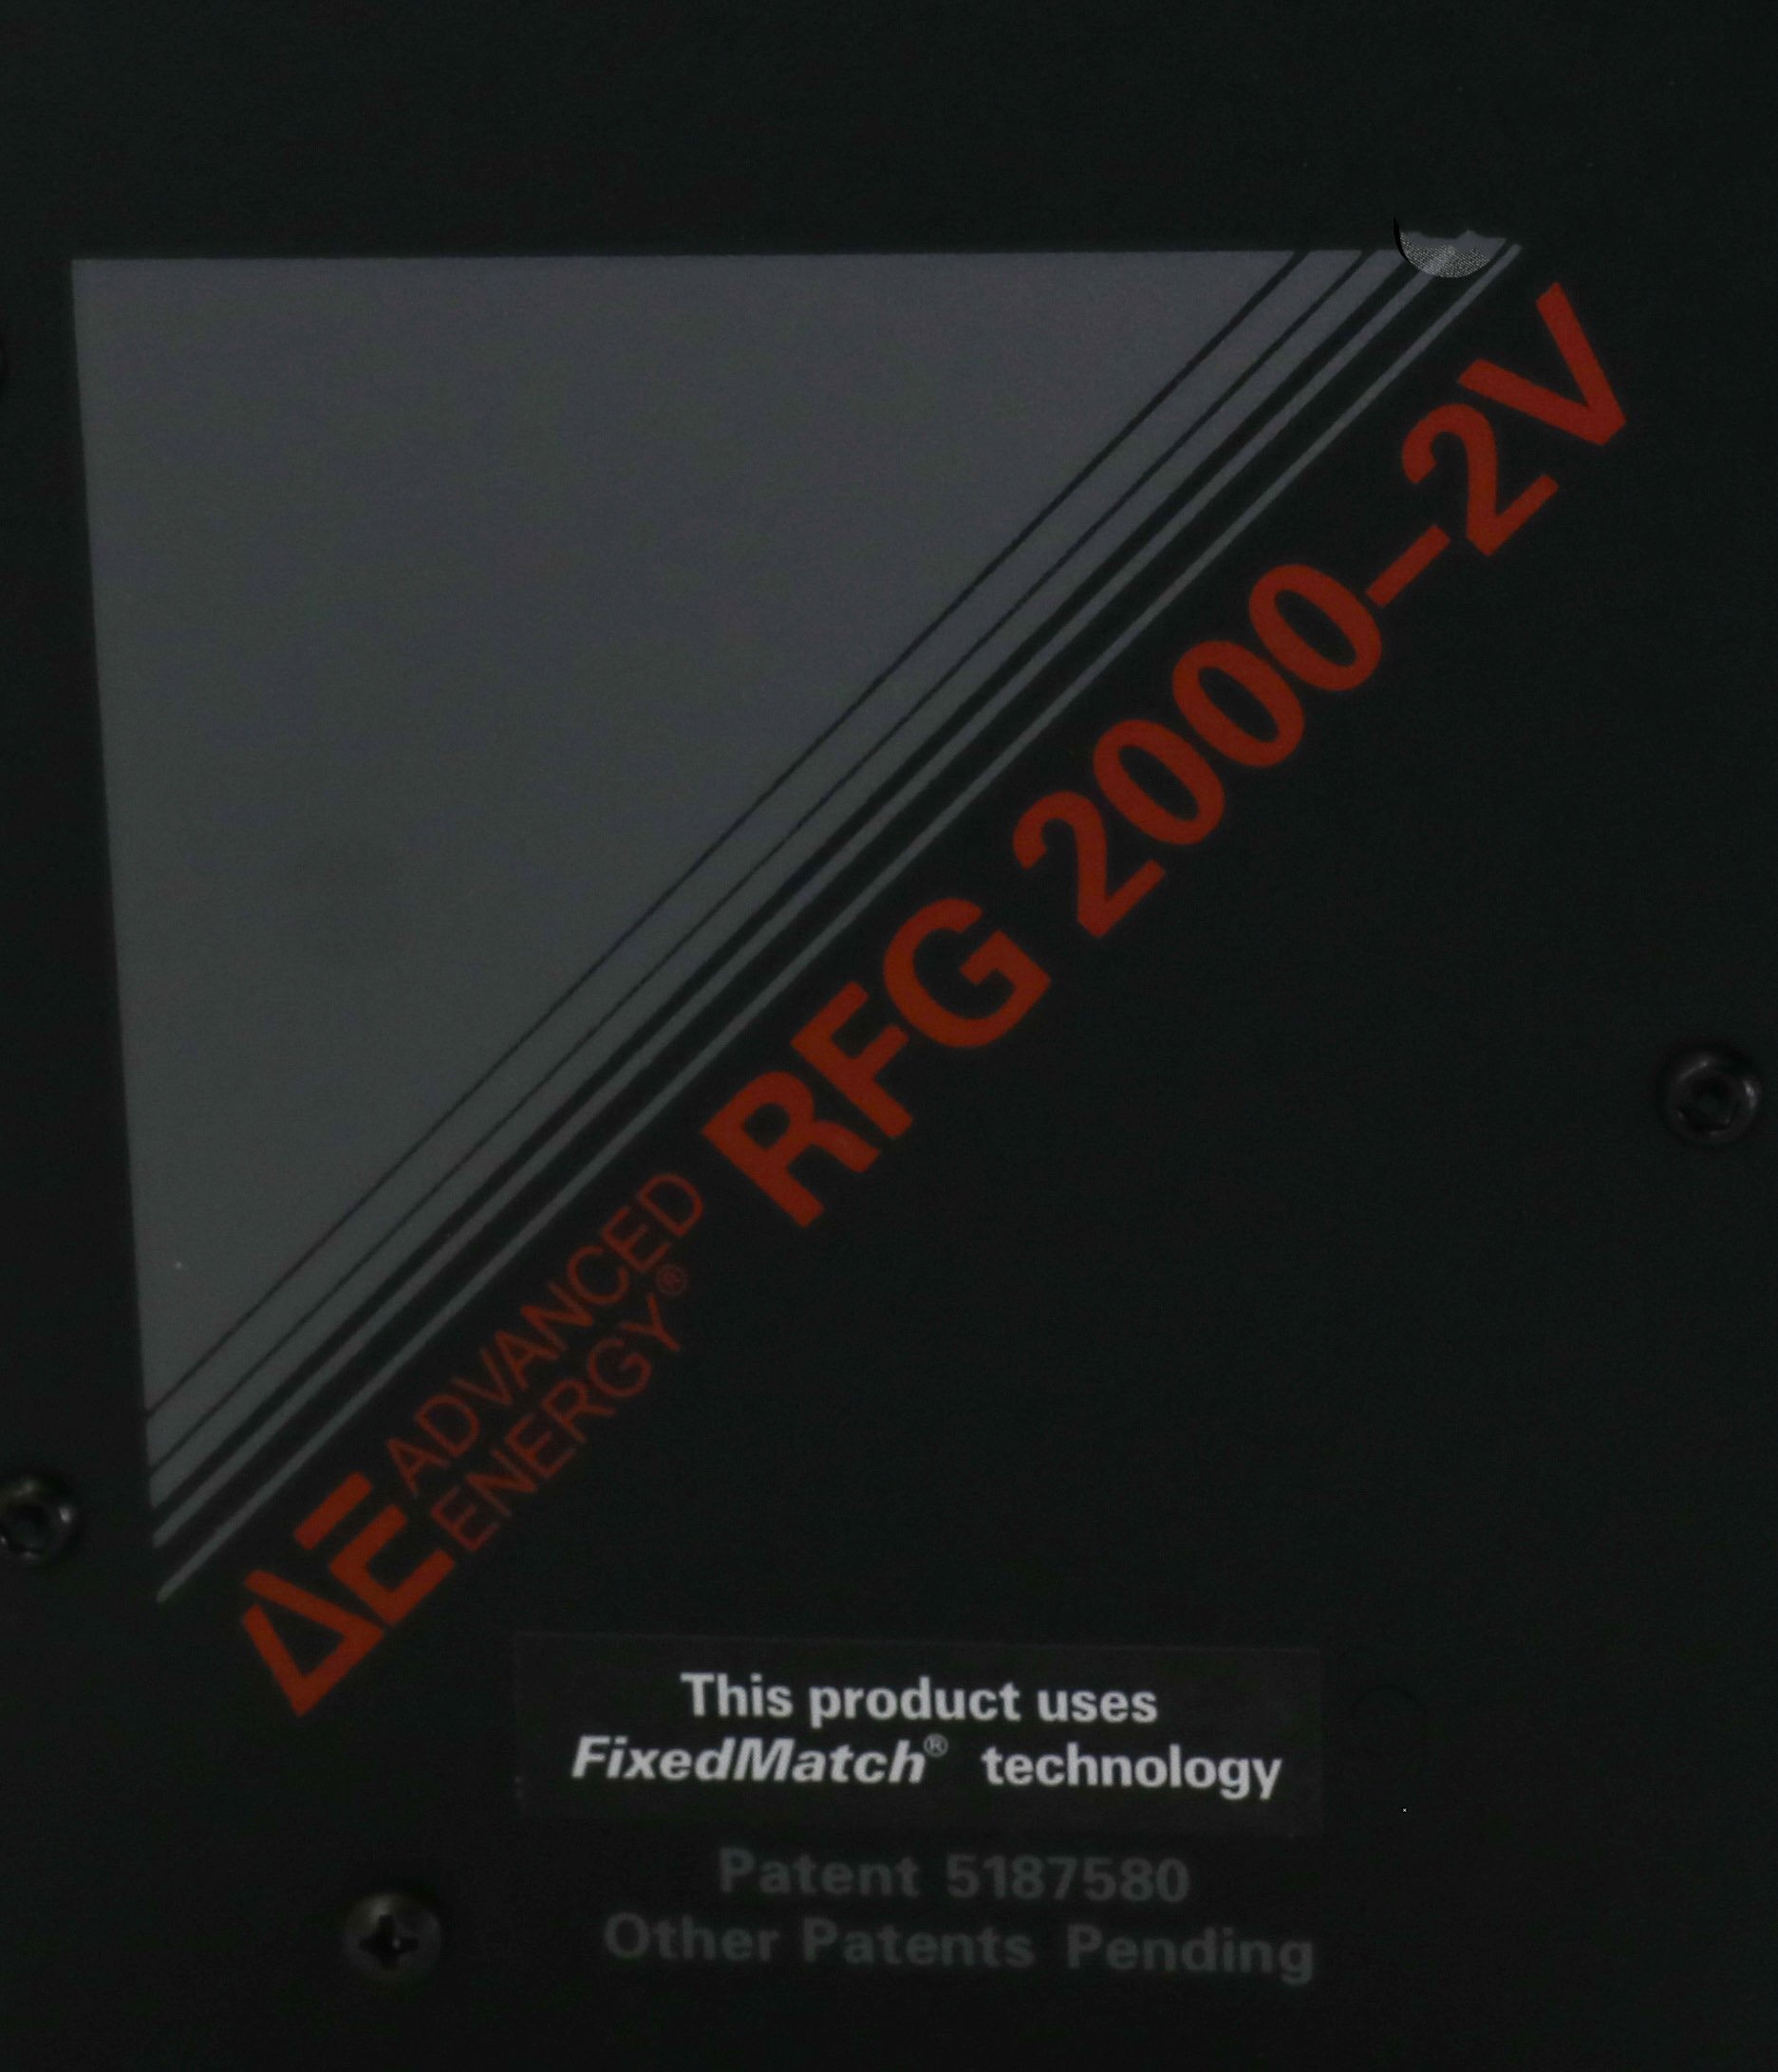 圖為 已使用的 ADVANCED ENERGY RFG 2000-2V 待售